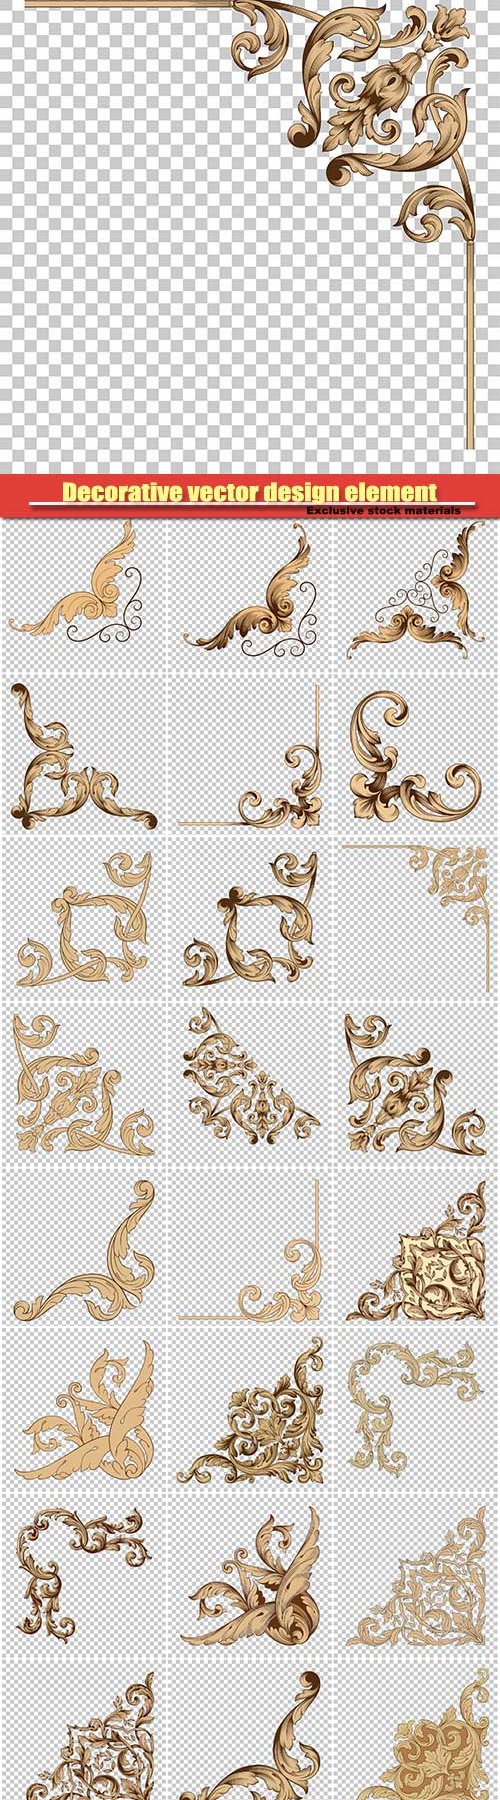 Decorative vector design element, vintage baroque ornament